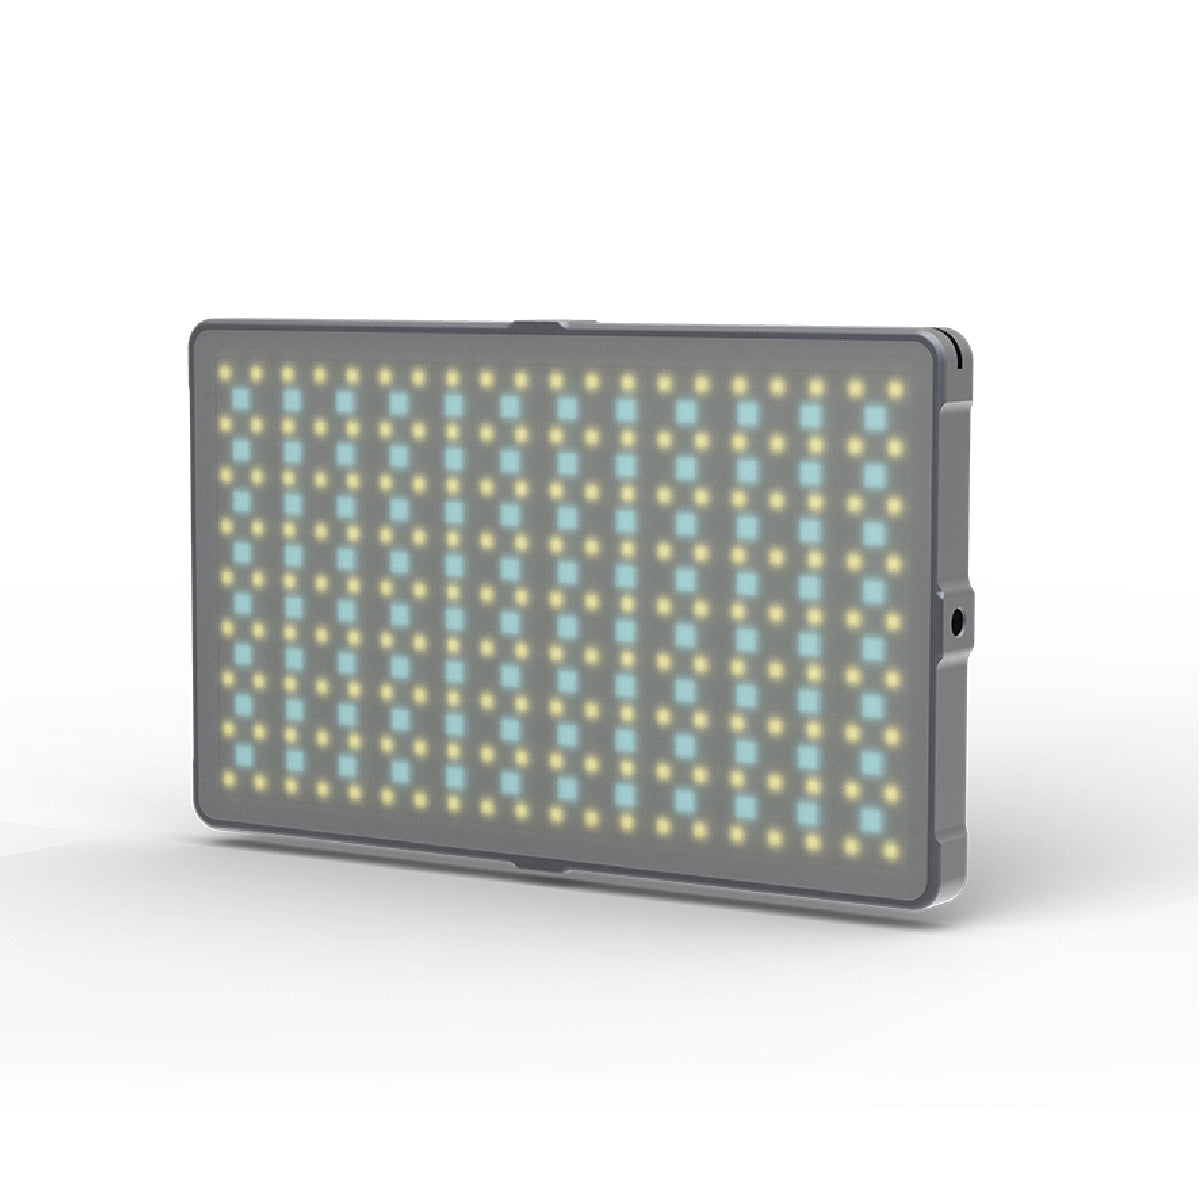 RGB LED Light Panel, 276LEDs, 24 Brightness Settings, 25 Color Temperatures, 21 RGB Color Presets